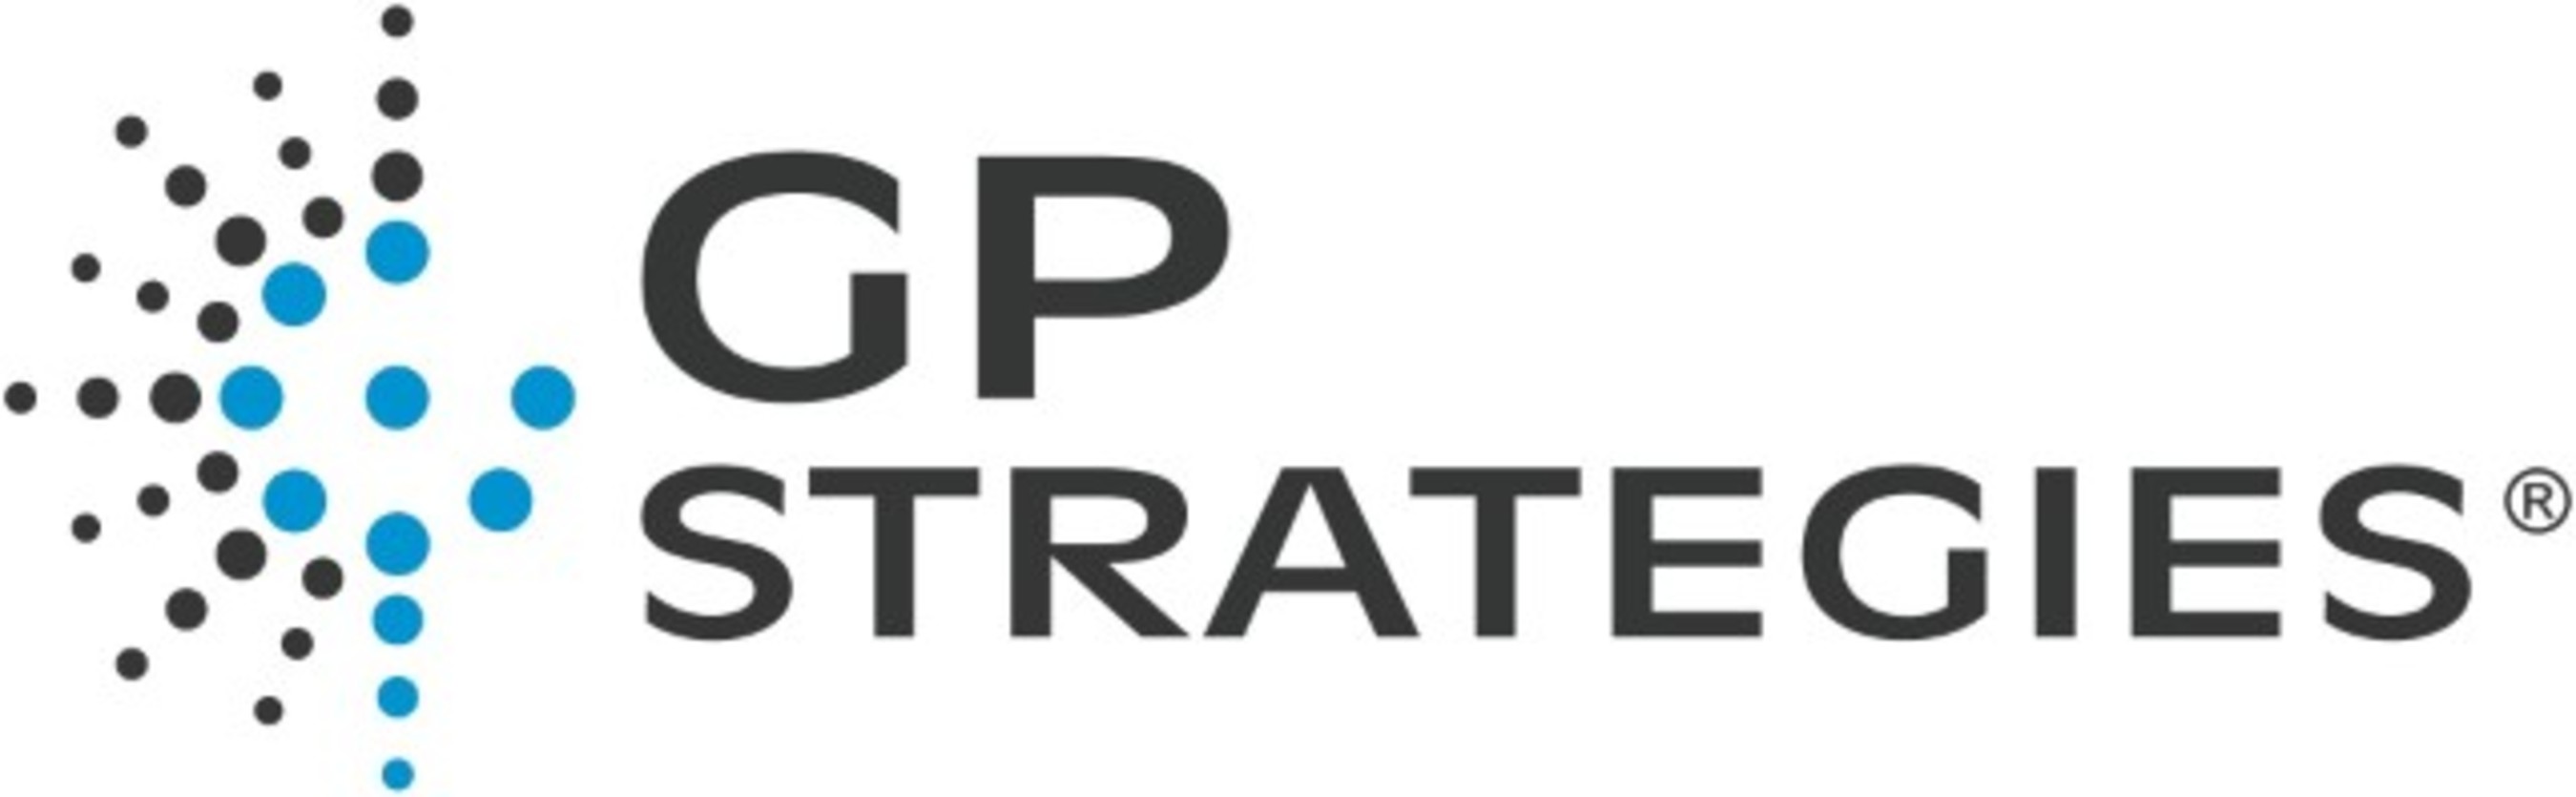 GP Strategies Corporation logo.